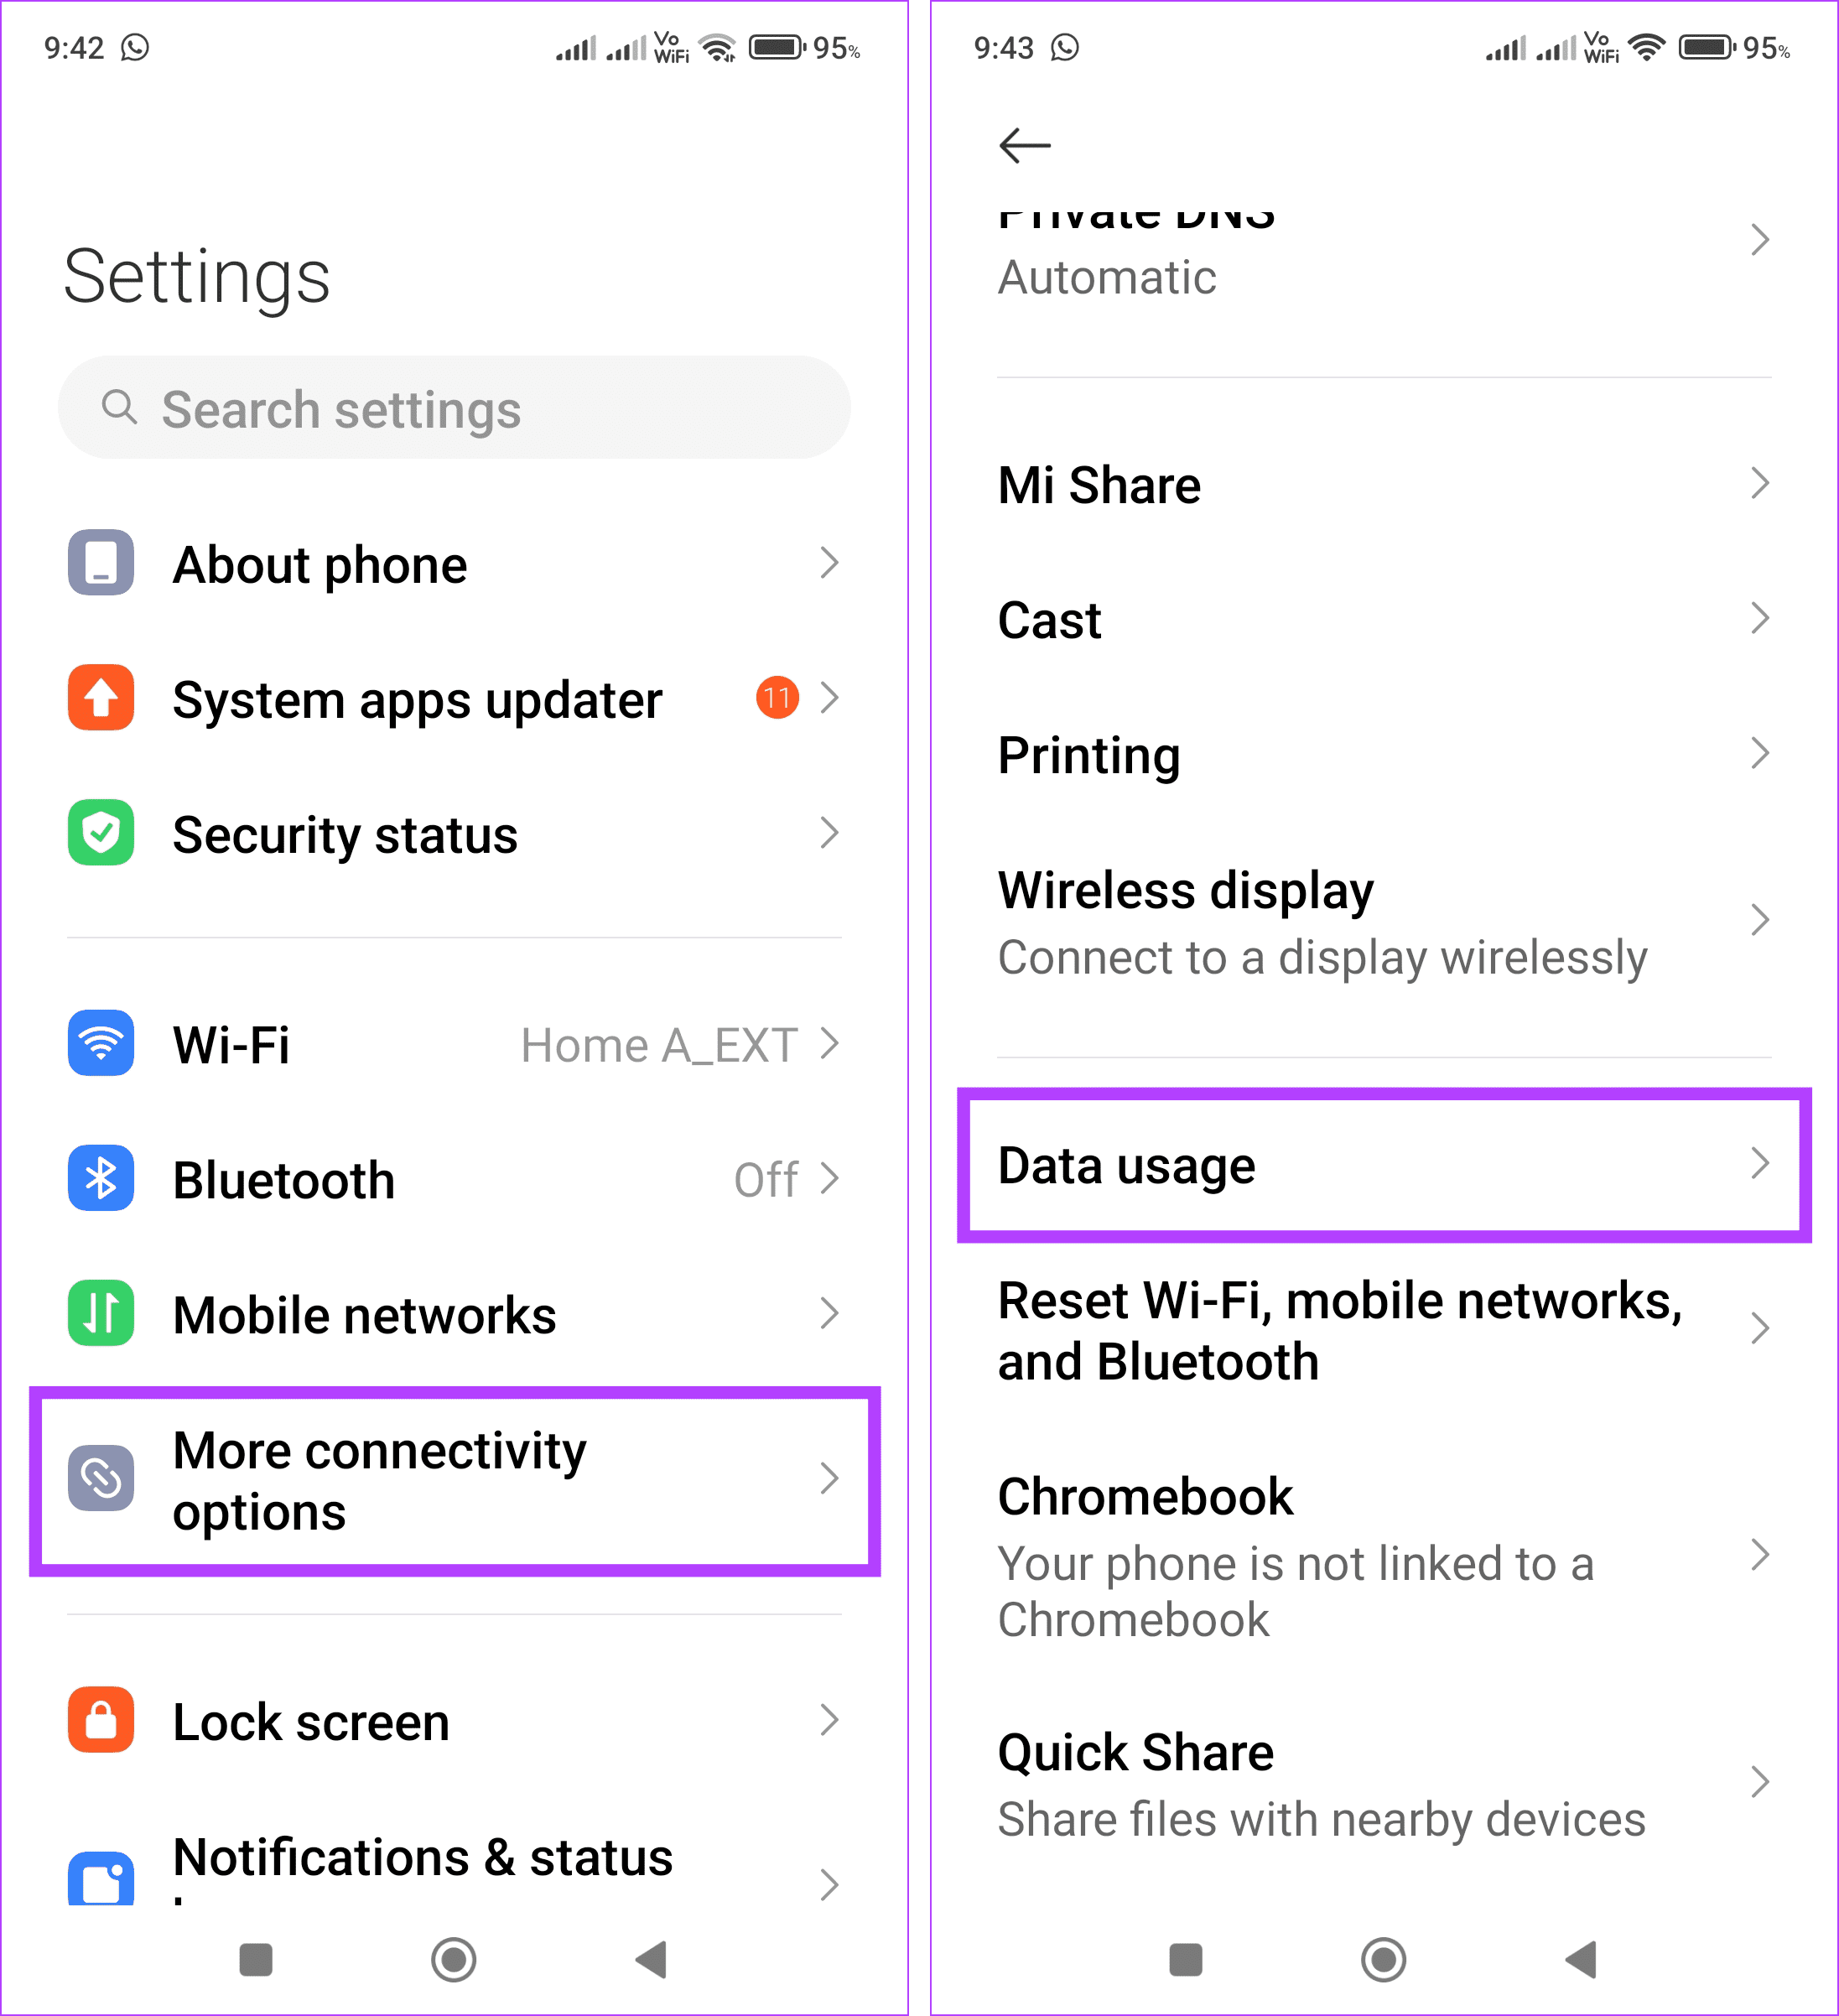 Open Data usage Xiaomi